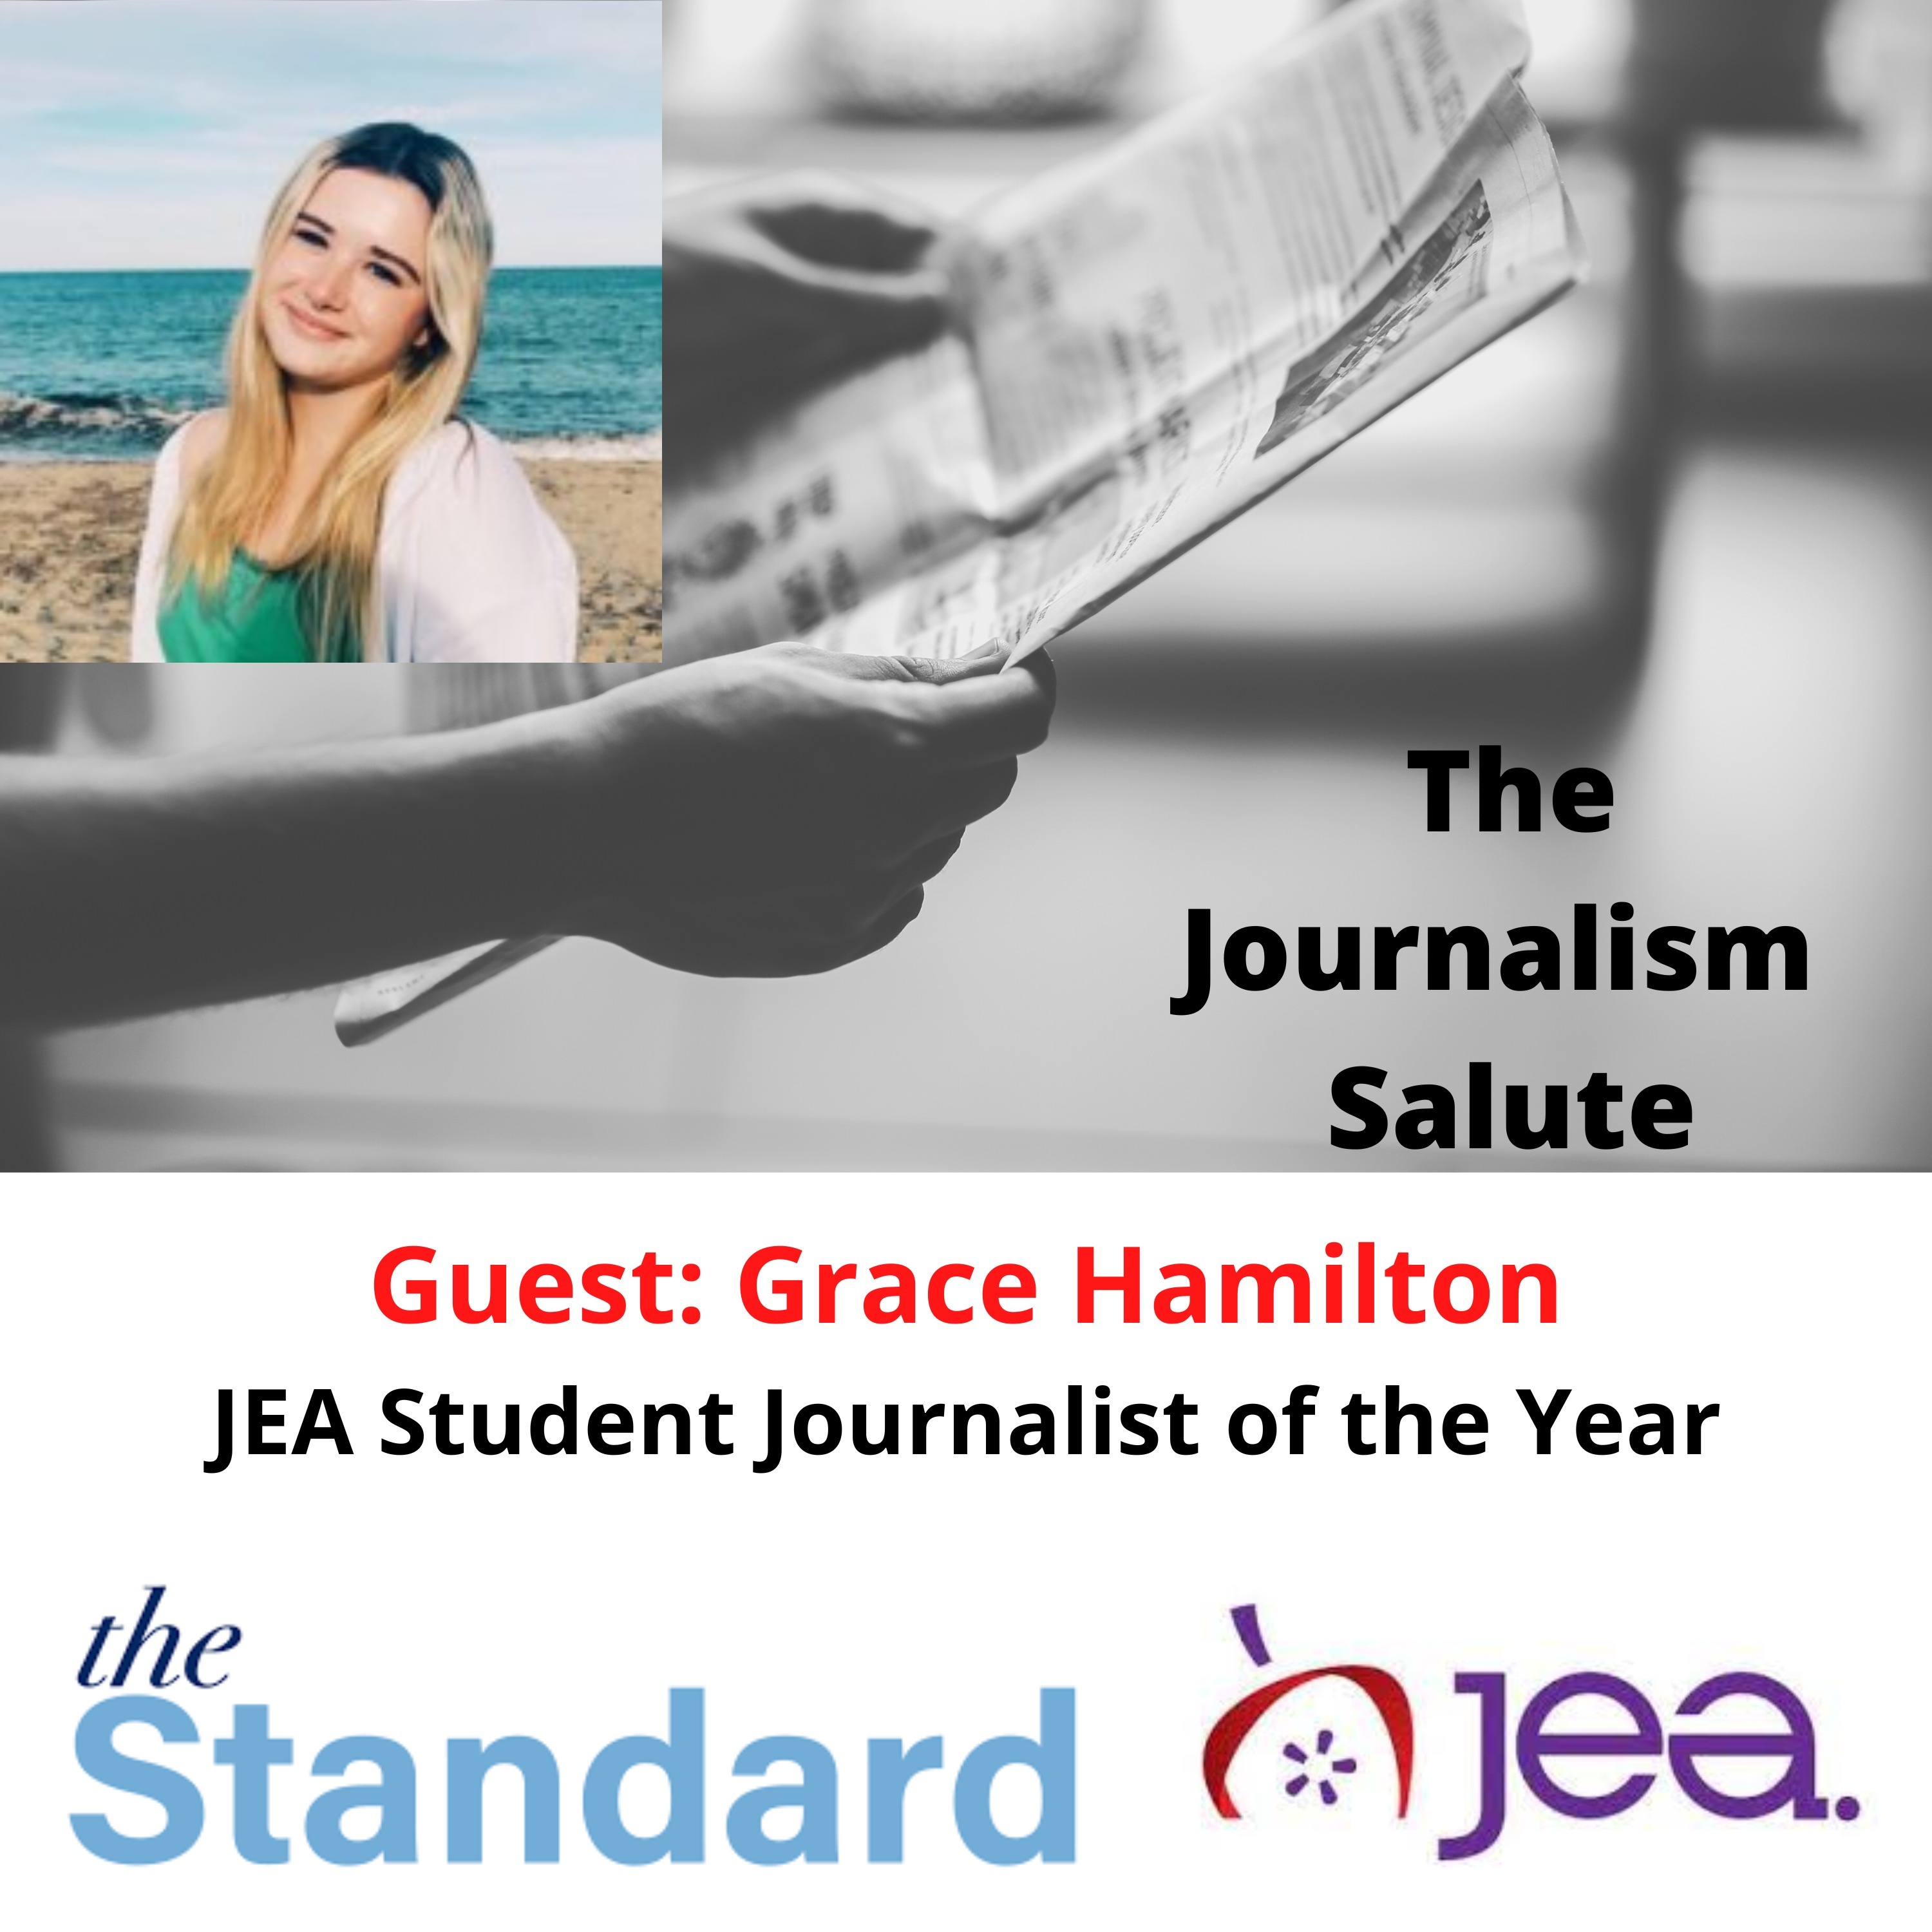 Grace Hamilton, JEA Student Journalist of the Year